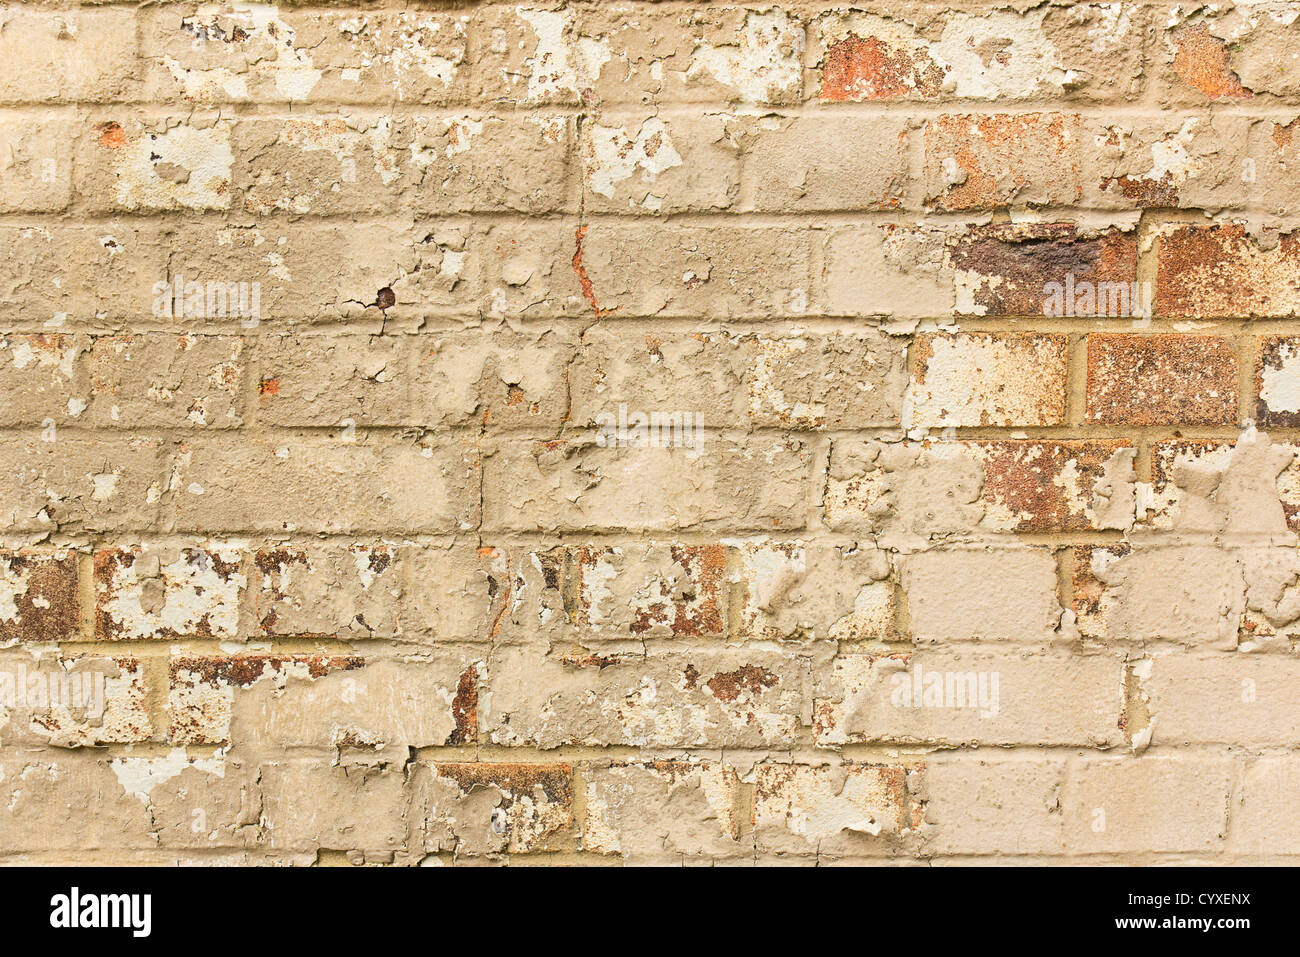 Aged crumbling brick wall background Stock Photo